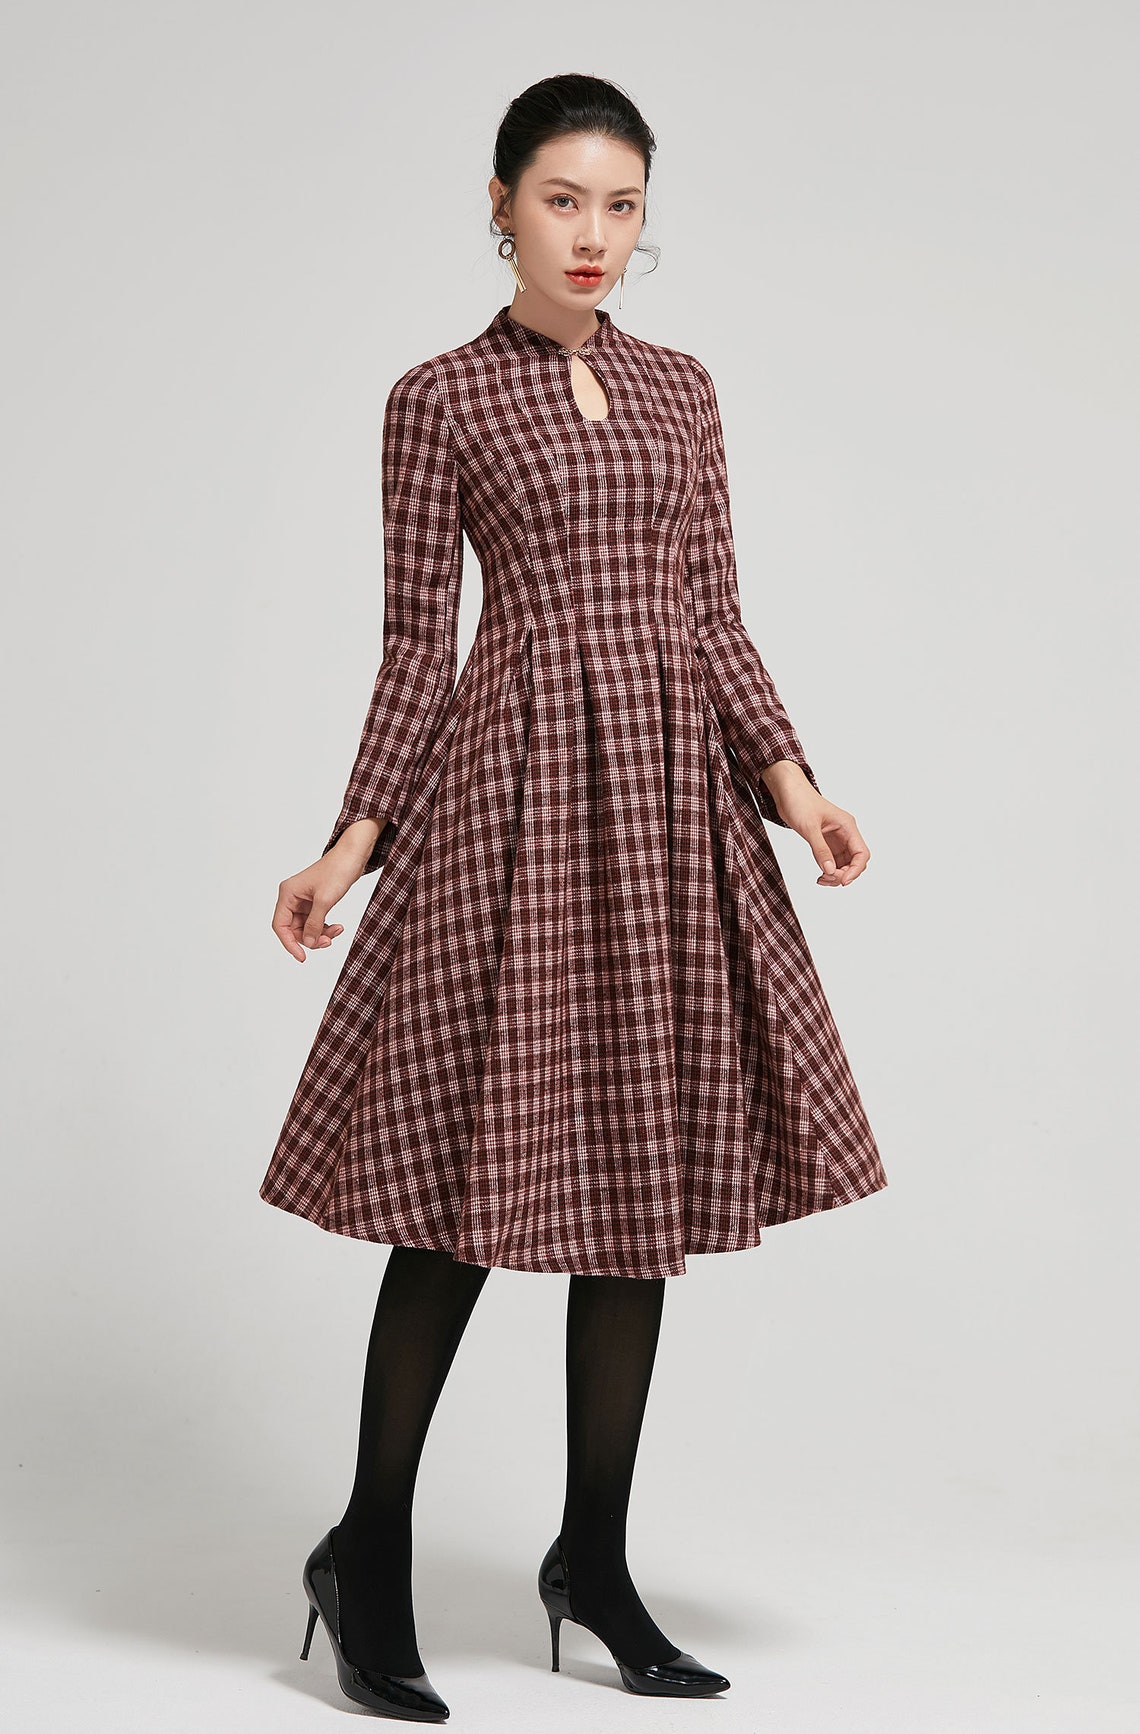 Vintage Inspired Plaid Wool Dress Womens A Line Swing Dress - Etsy